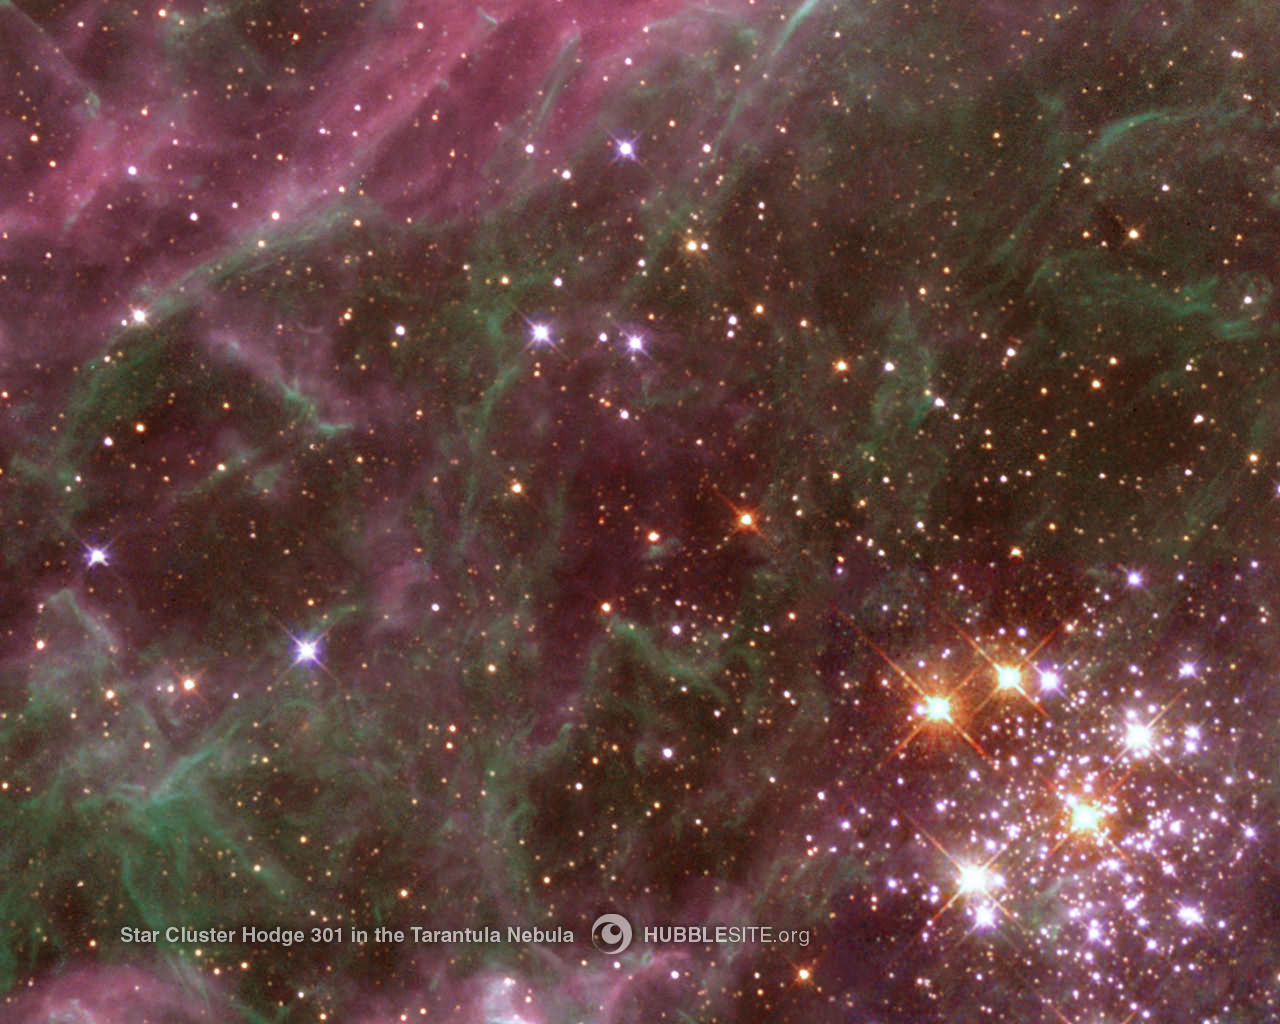 Desktop Wallpaper For Star Cluster Hodge In The Tarantula Nebula